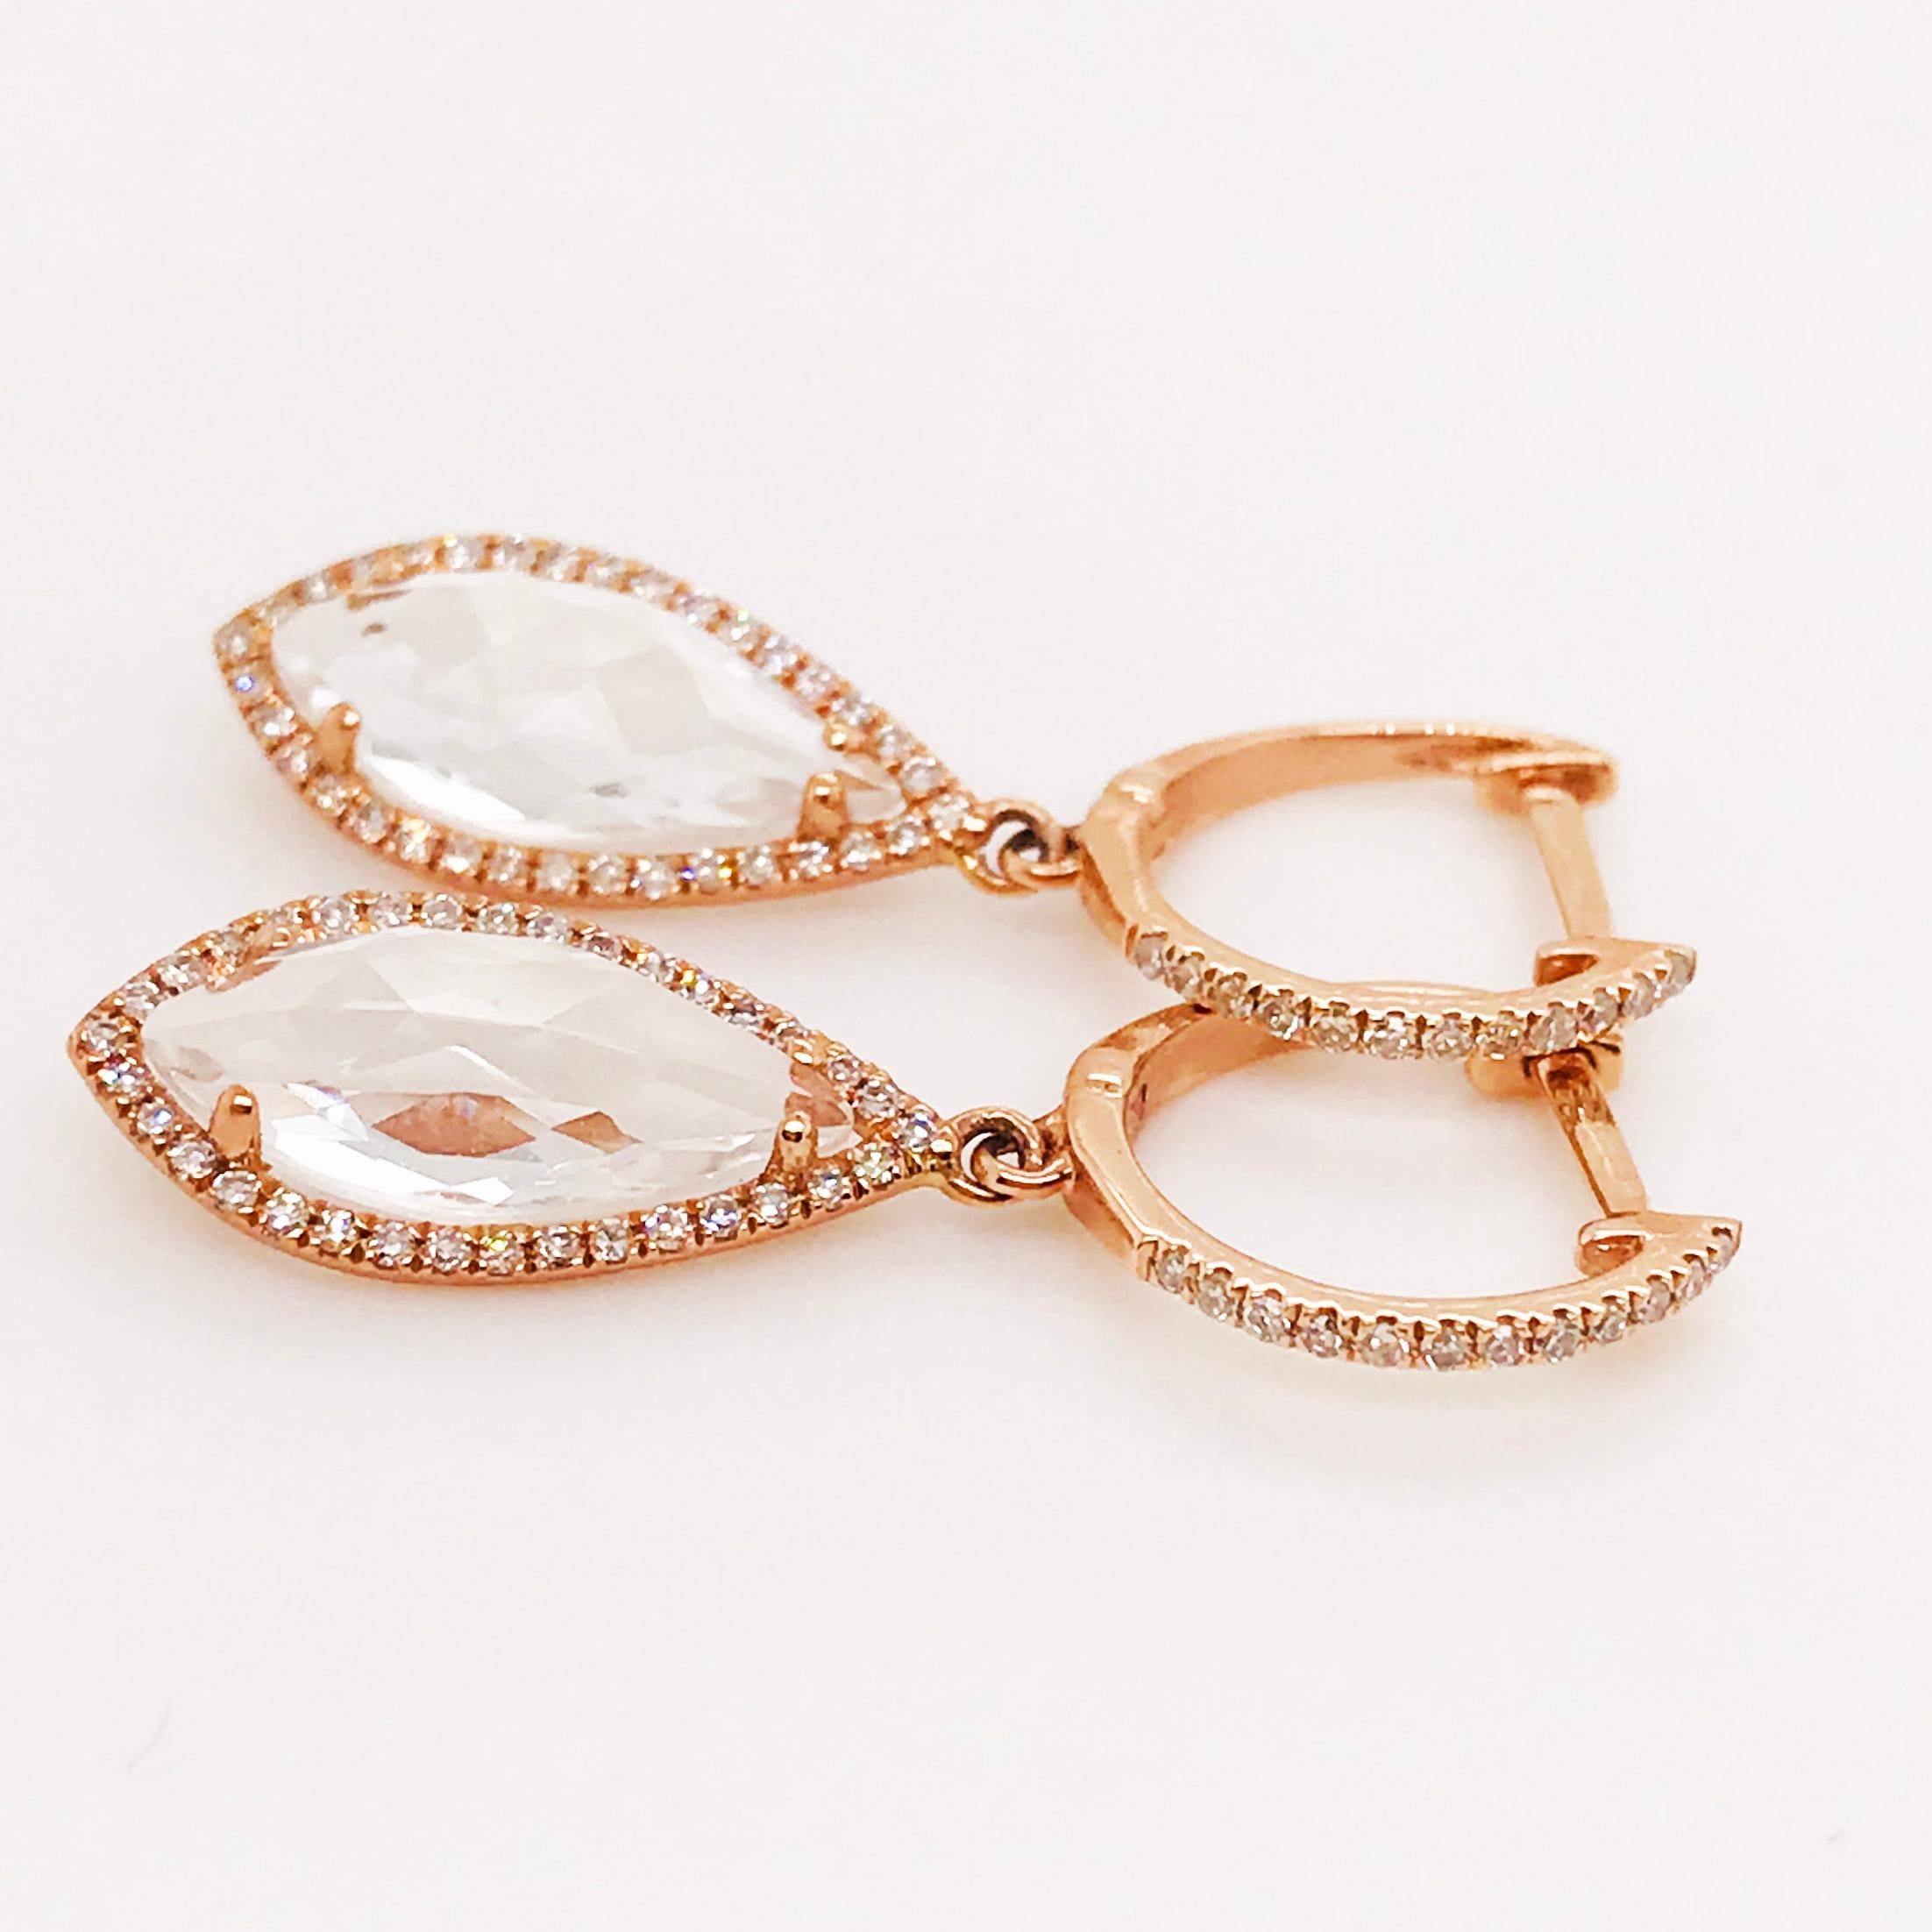 2.75 Carat White Topaz and 0.25 Carat Diamond Earring Dangles in 14 Karat Gold For Sale 1